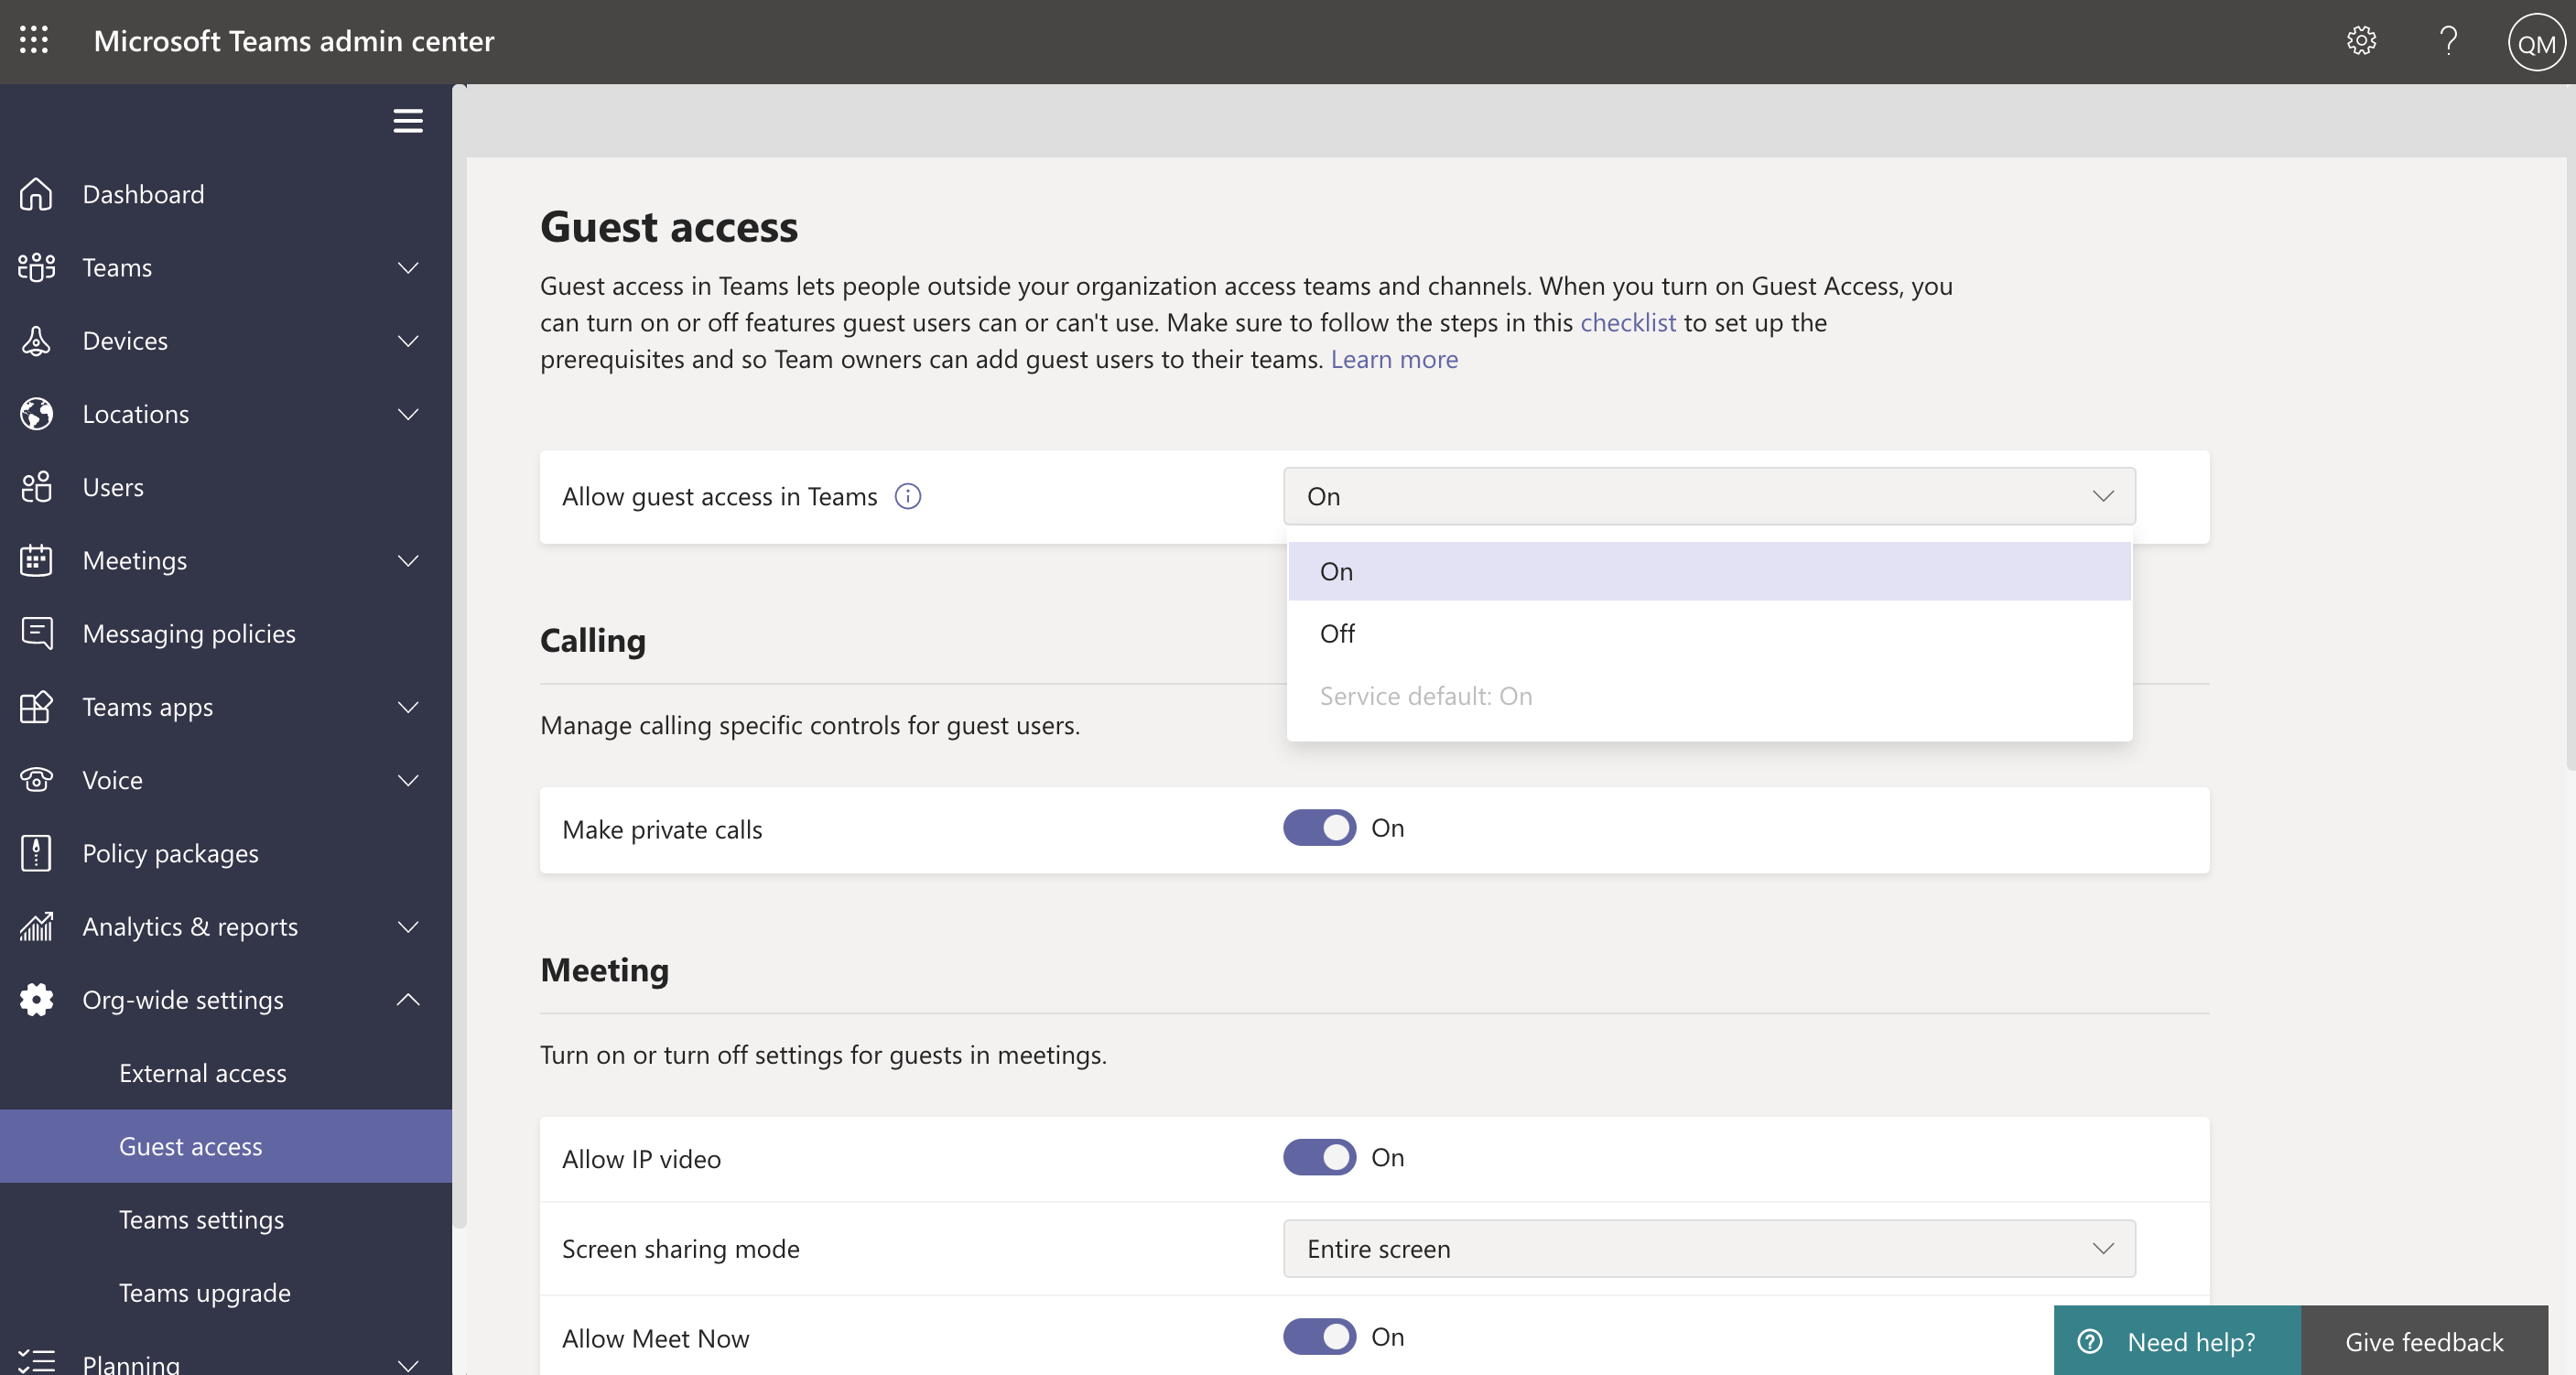 Screenshot of guest access settings in Teams admin center.